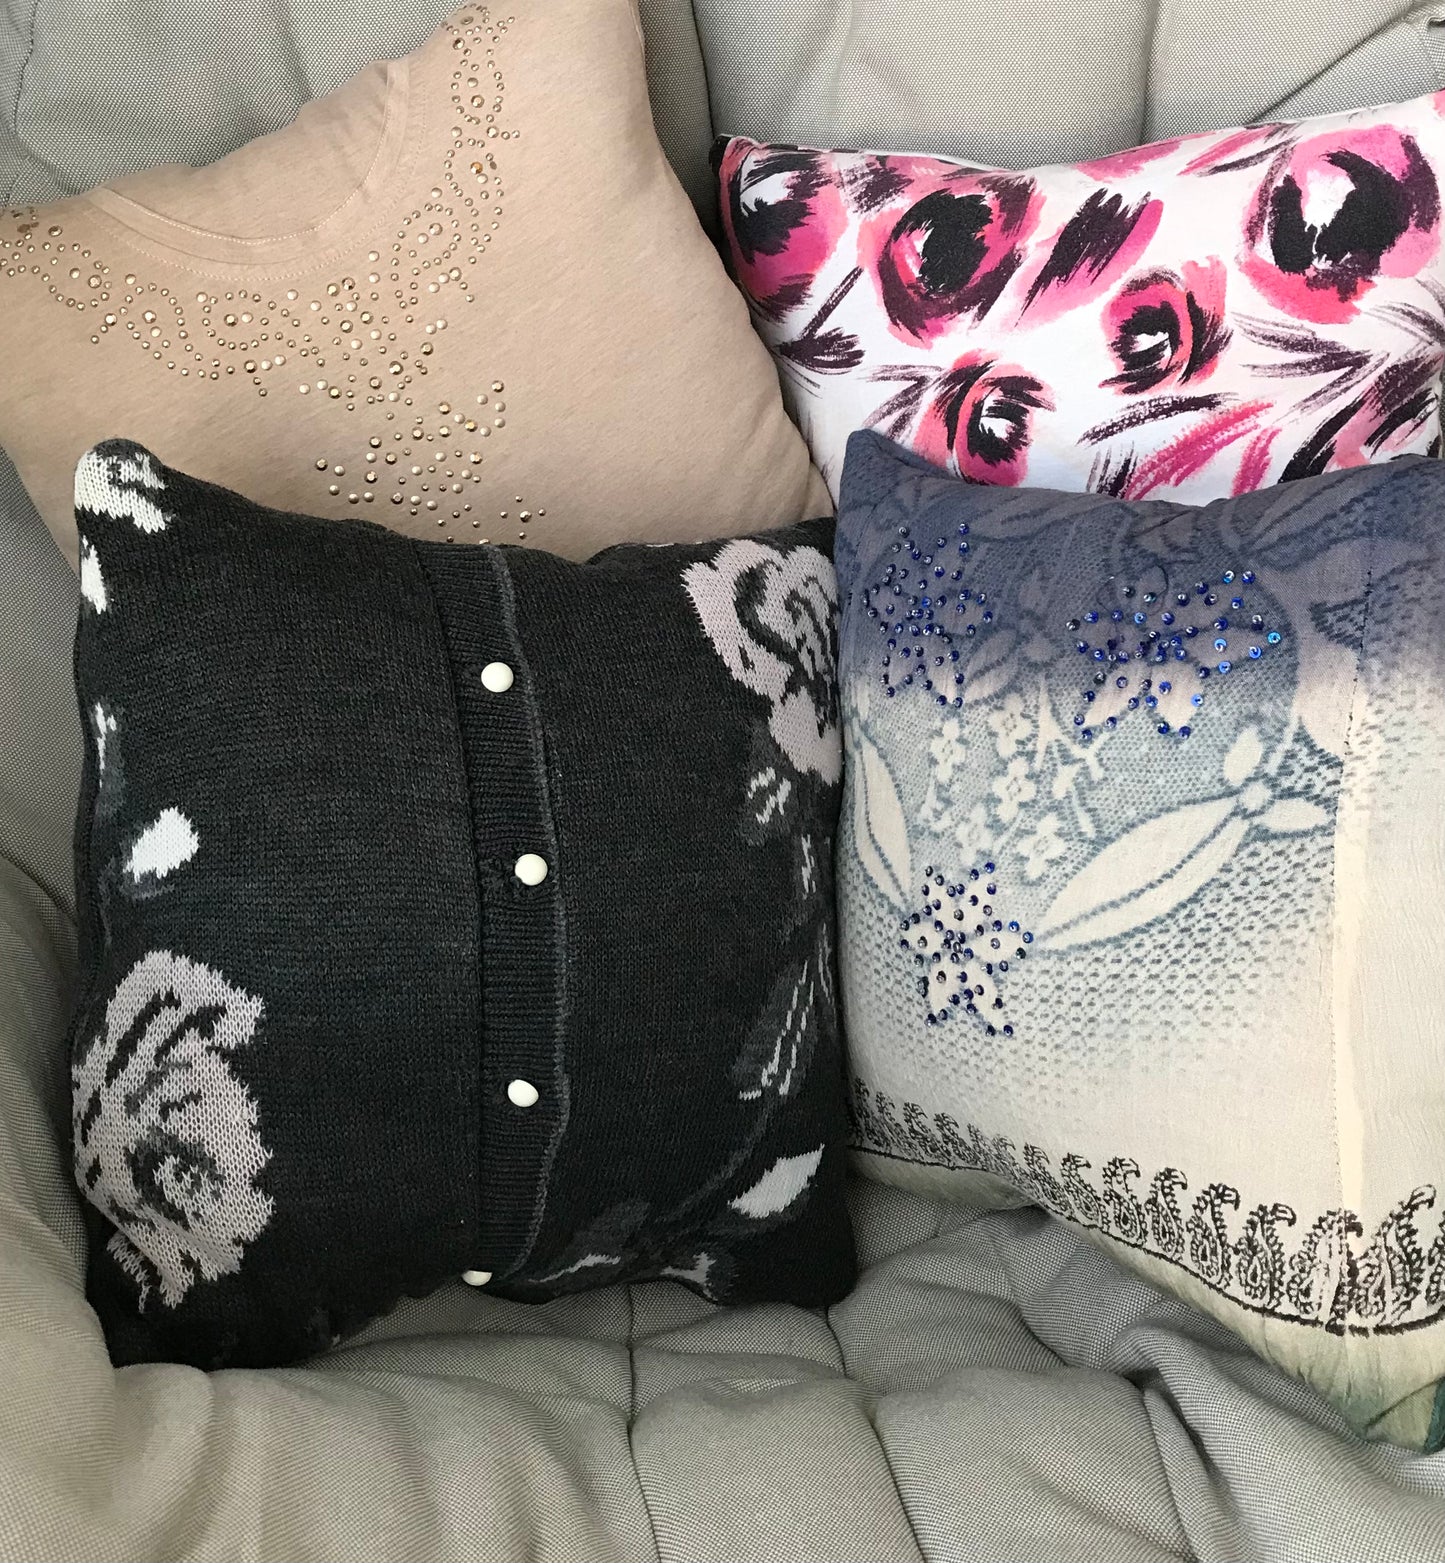 Custom Memorial Pillows